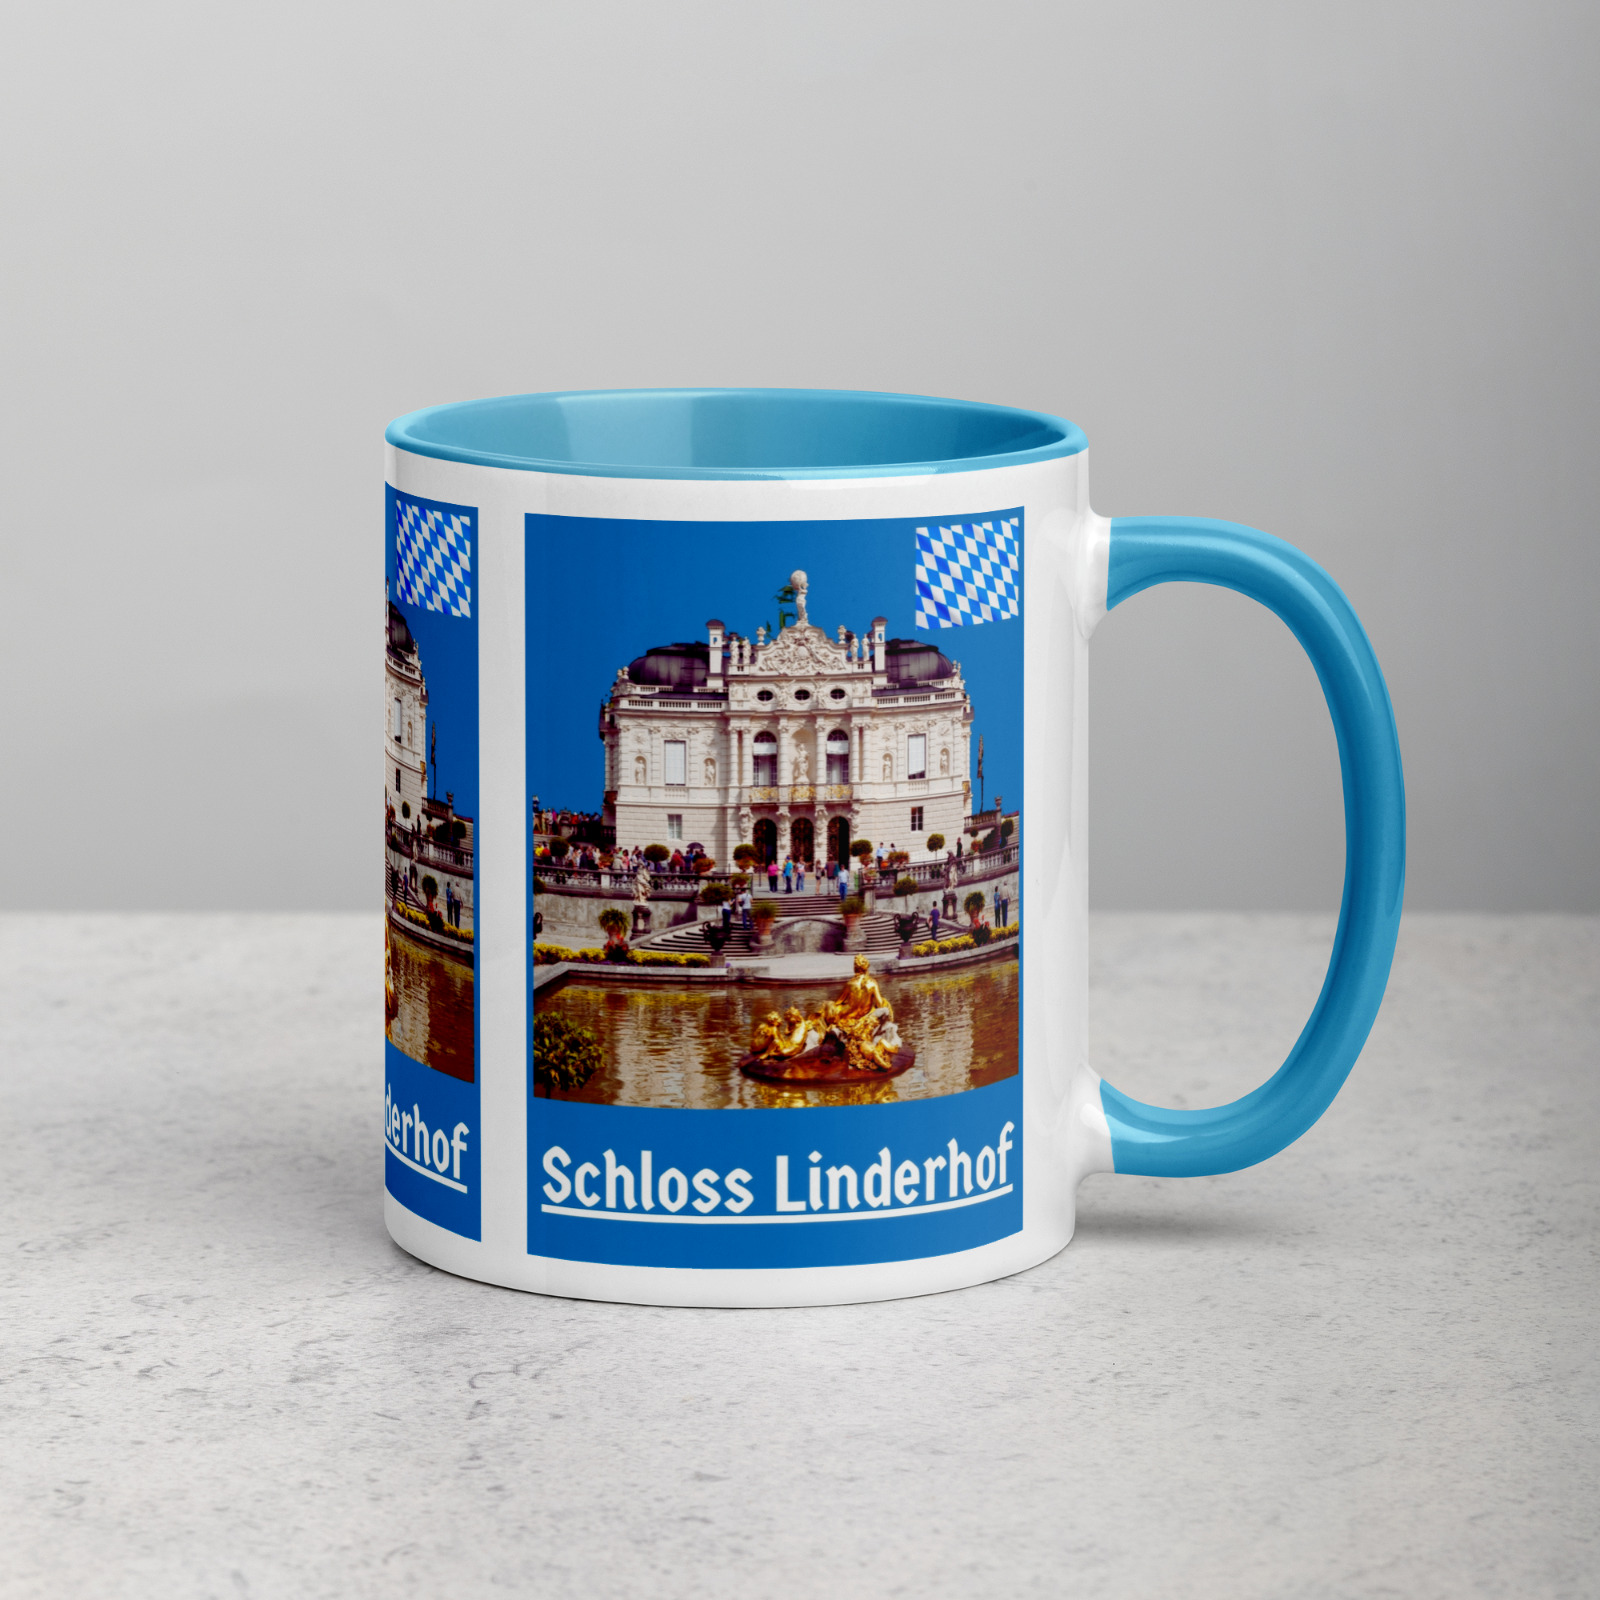 NEU Premium Kaffeetasse Schloss Linderhof König Ludwig II. von Bayern Souvenir